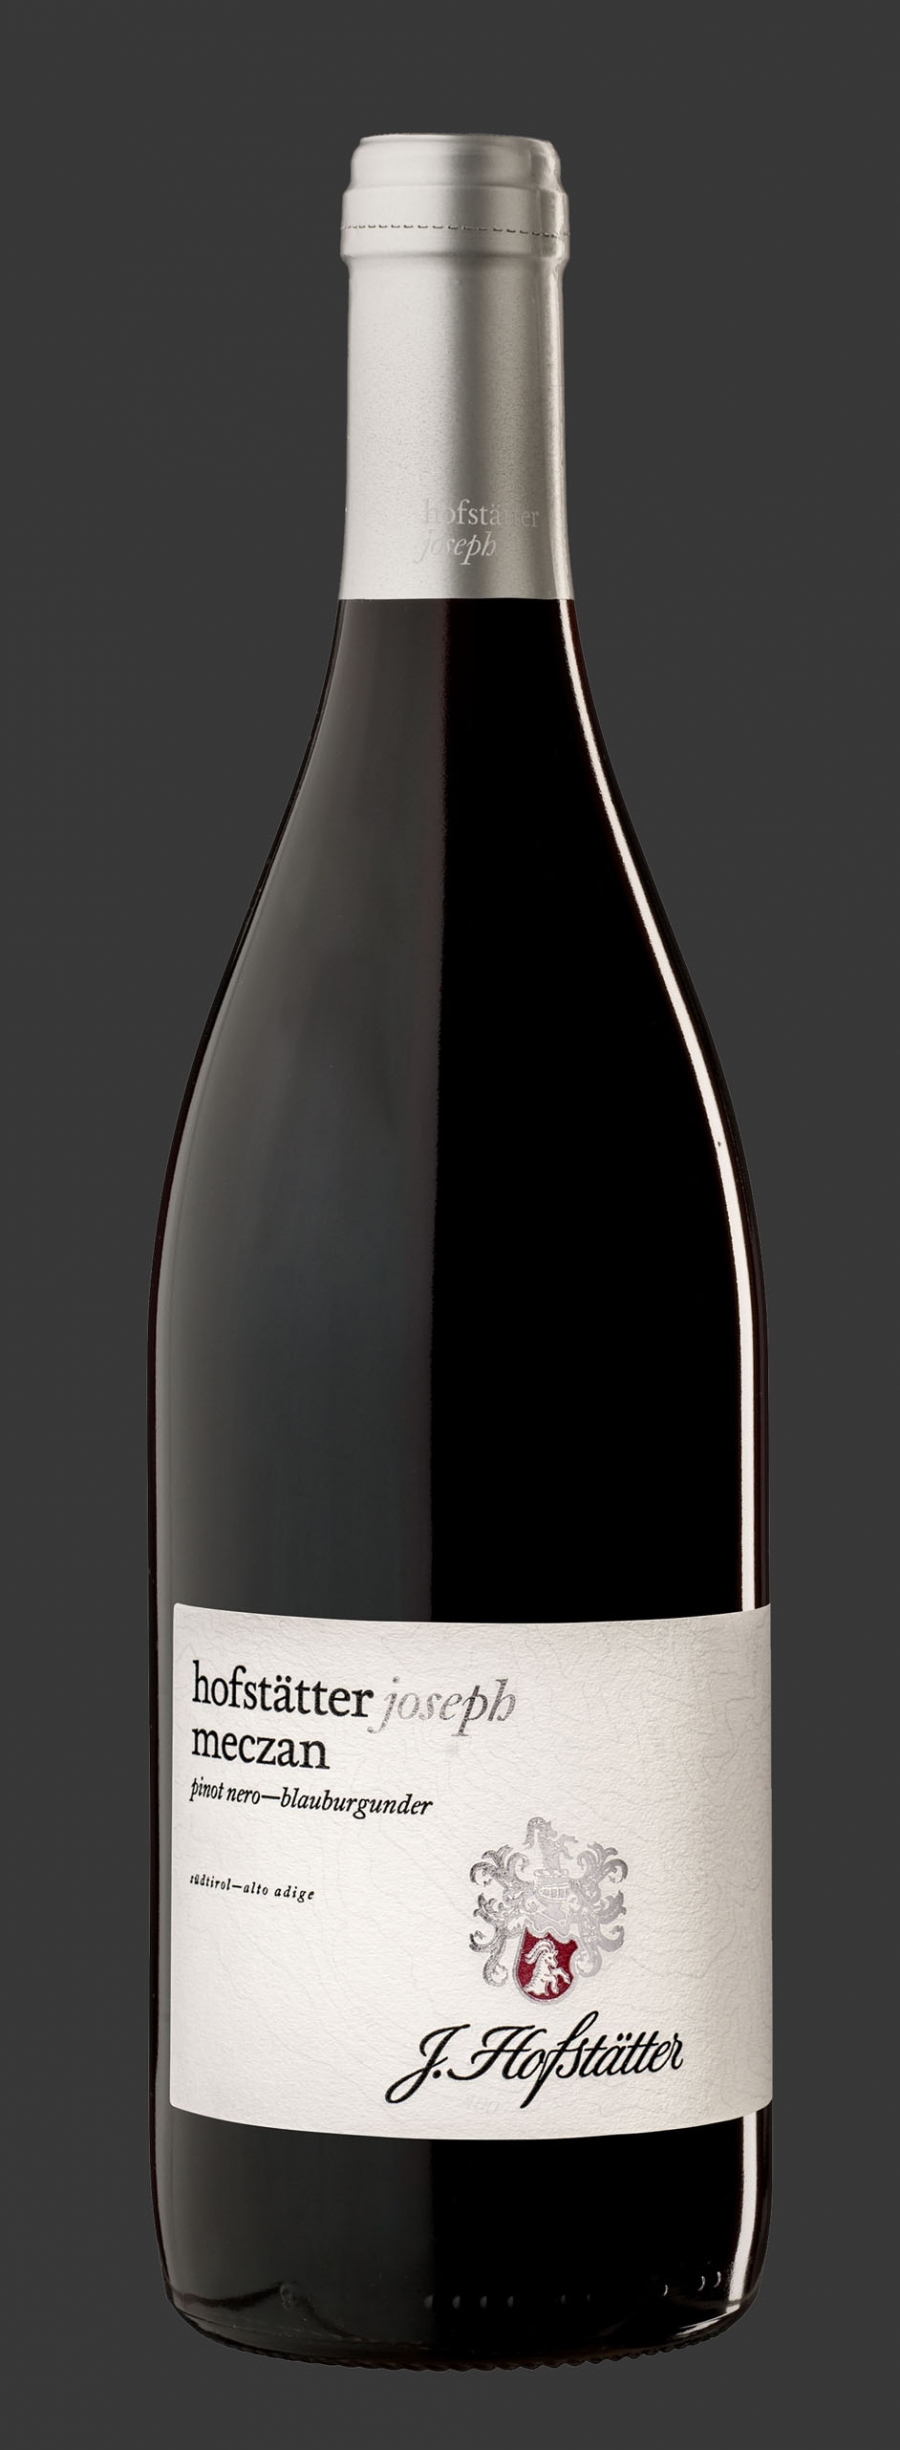 2020 Hofstatter Pinot Noir Meczan Alto Adige - click image for full description